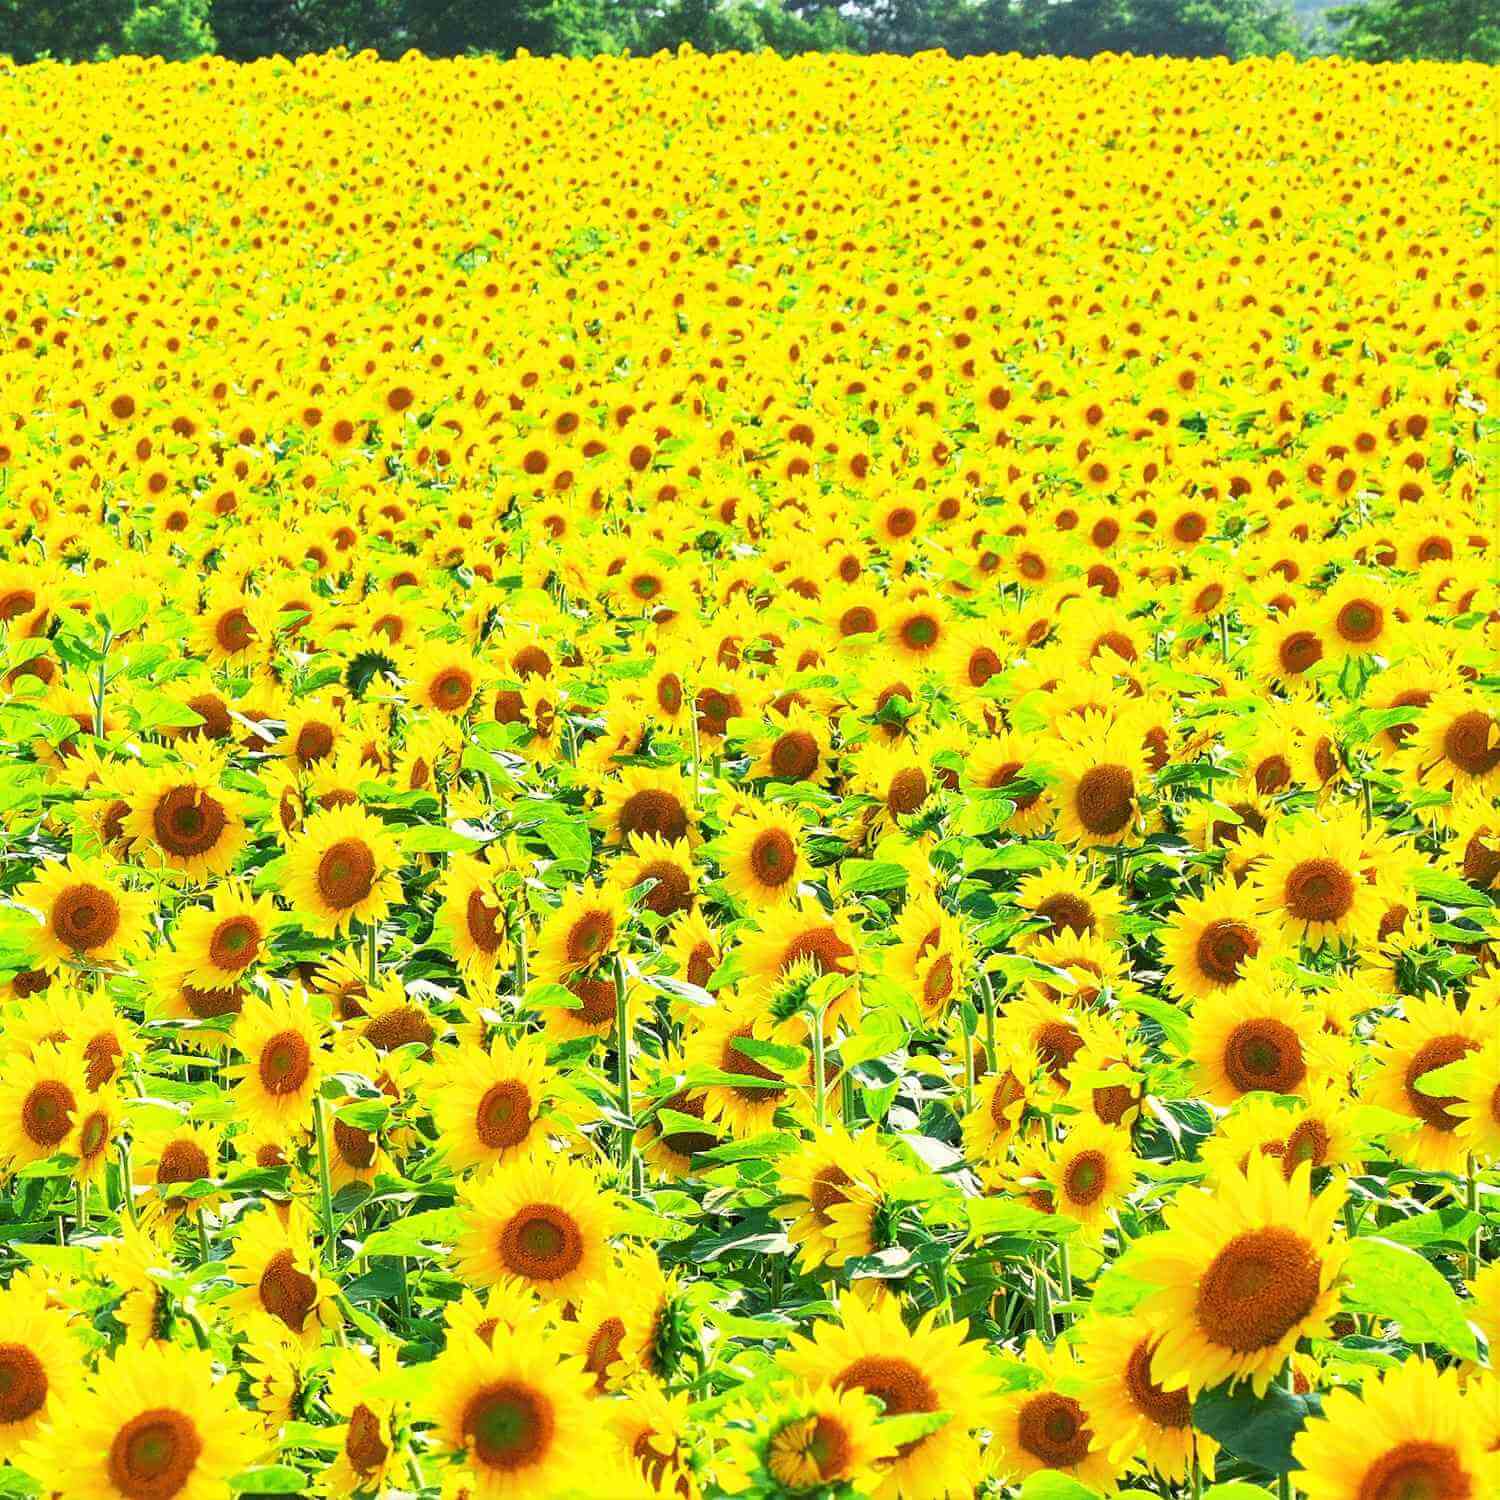 Landscapes of Hokkaido's summer flower gardens = AdobeStock 8